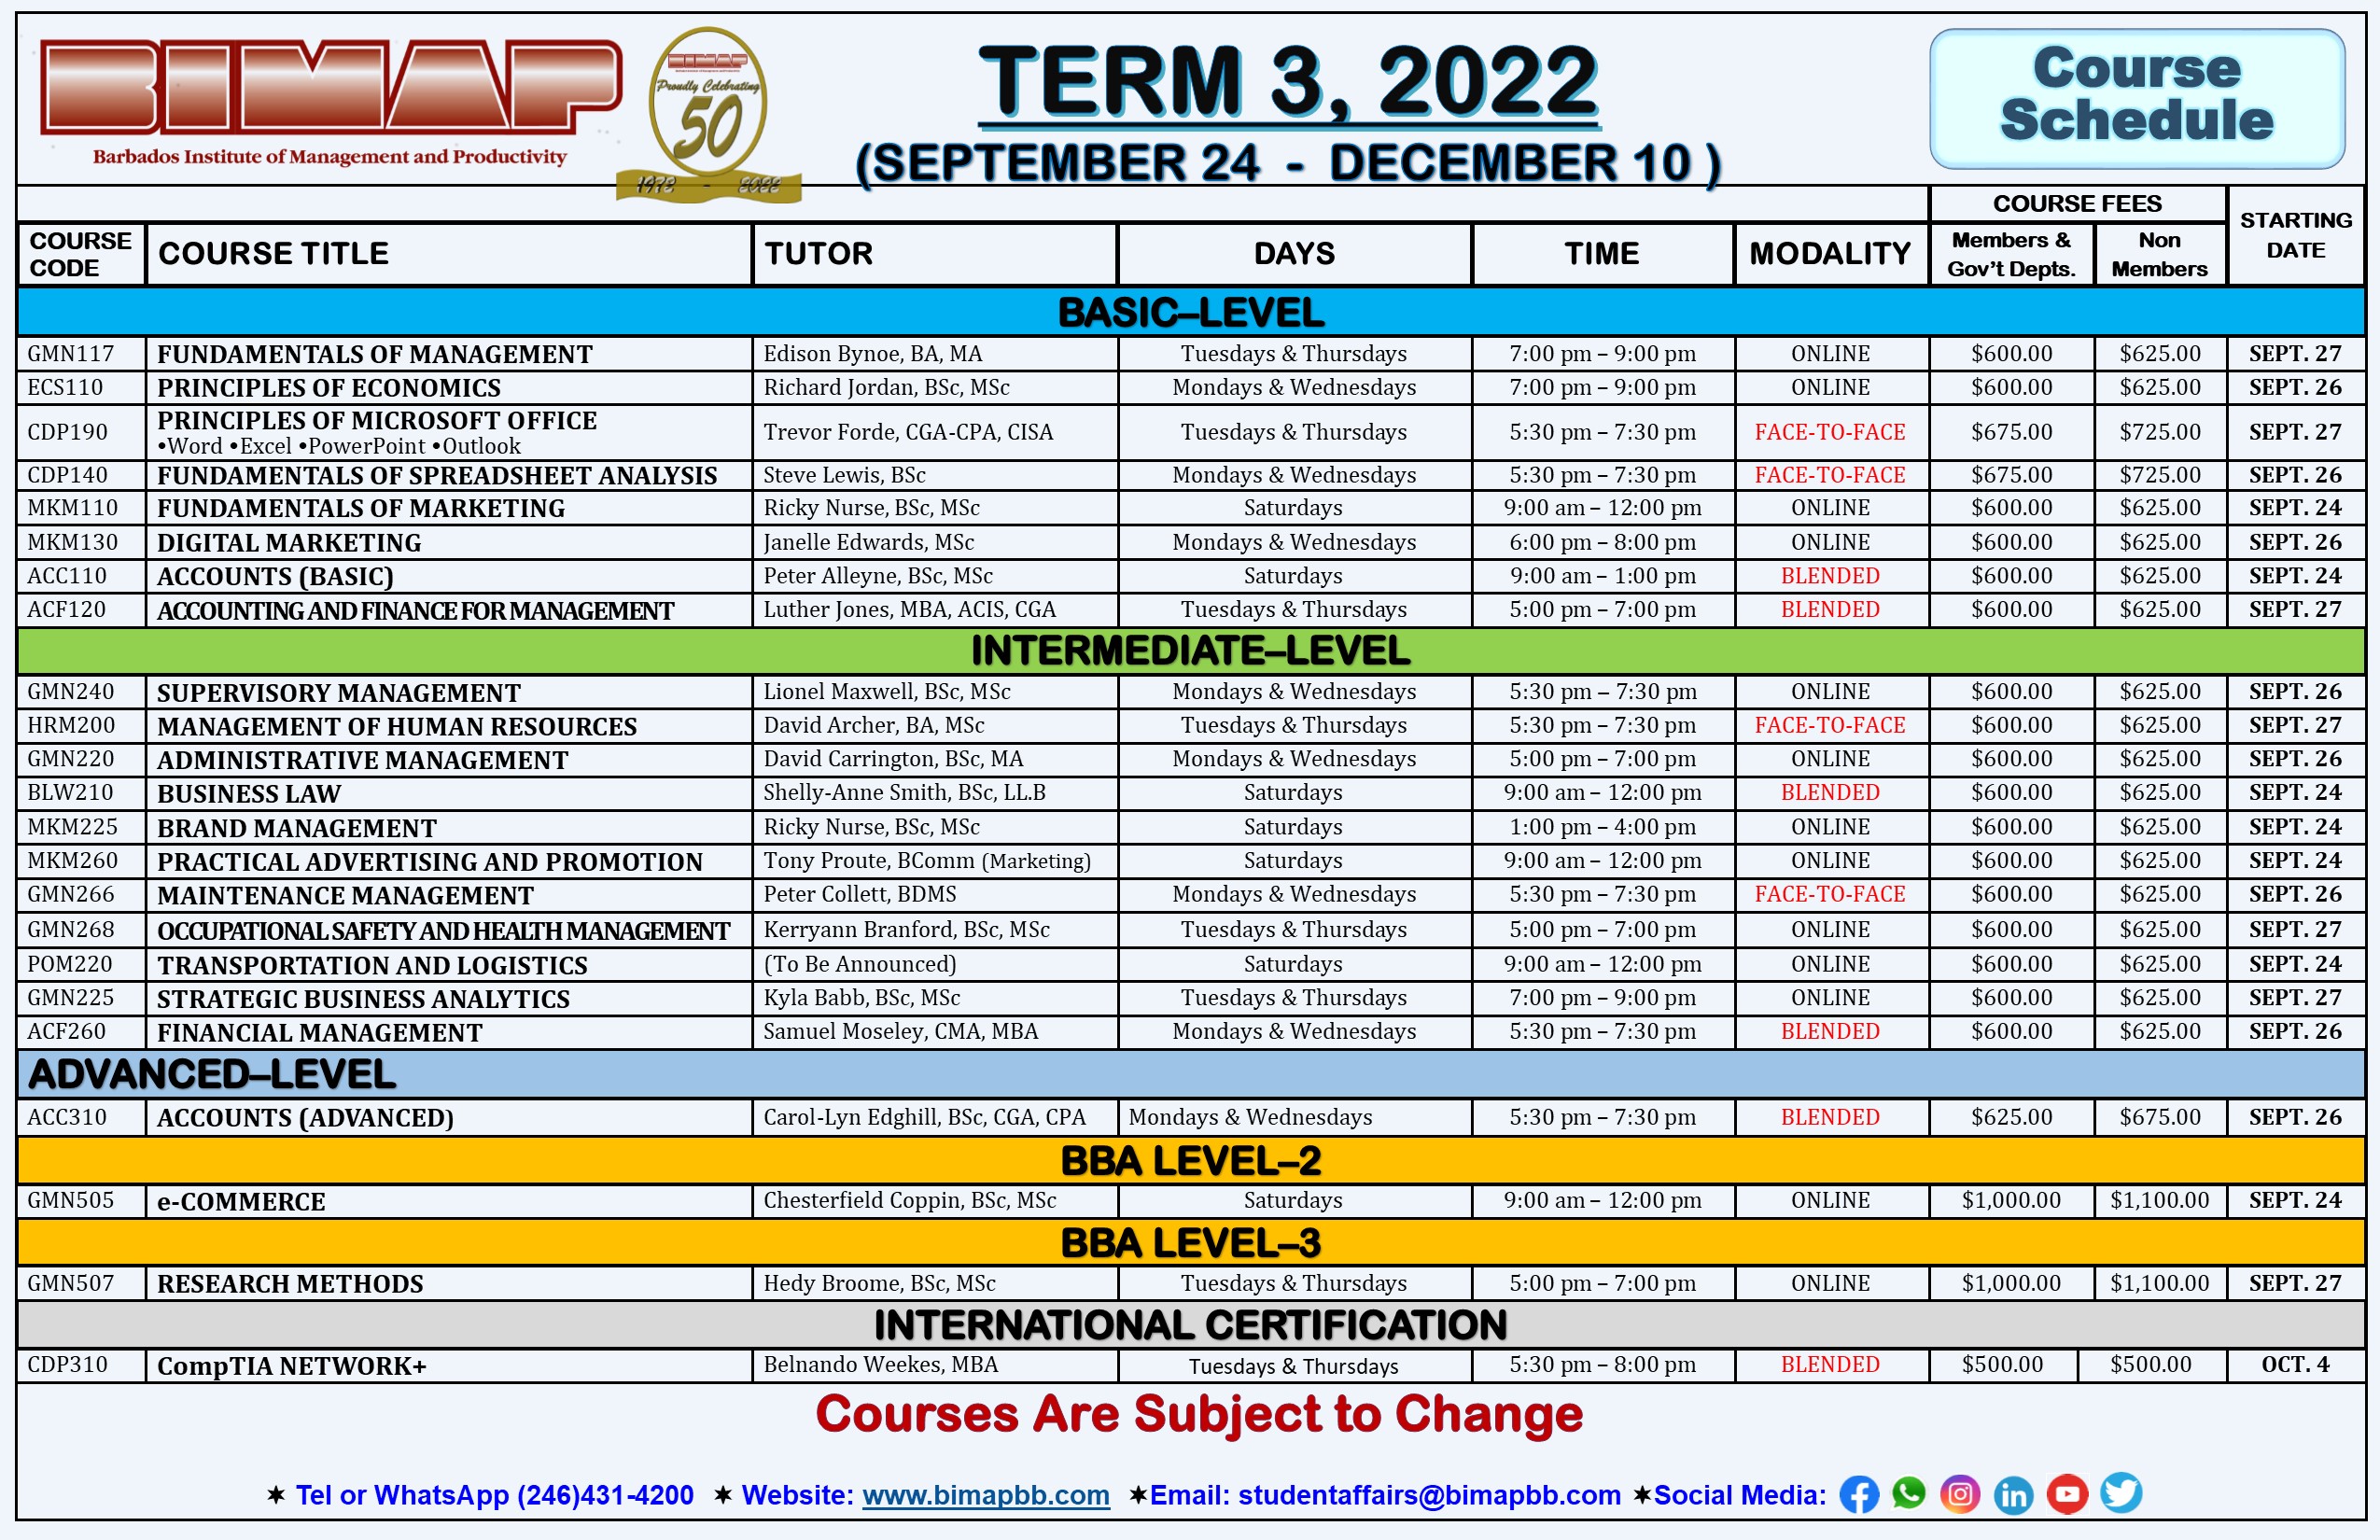 BIMAP: Course Schedule - Term 3, 2022